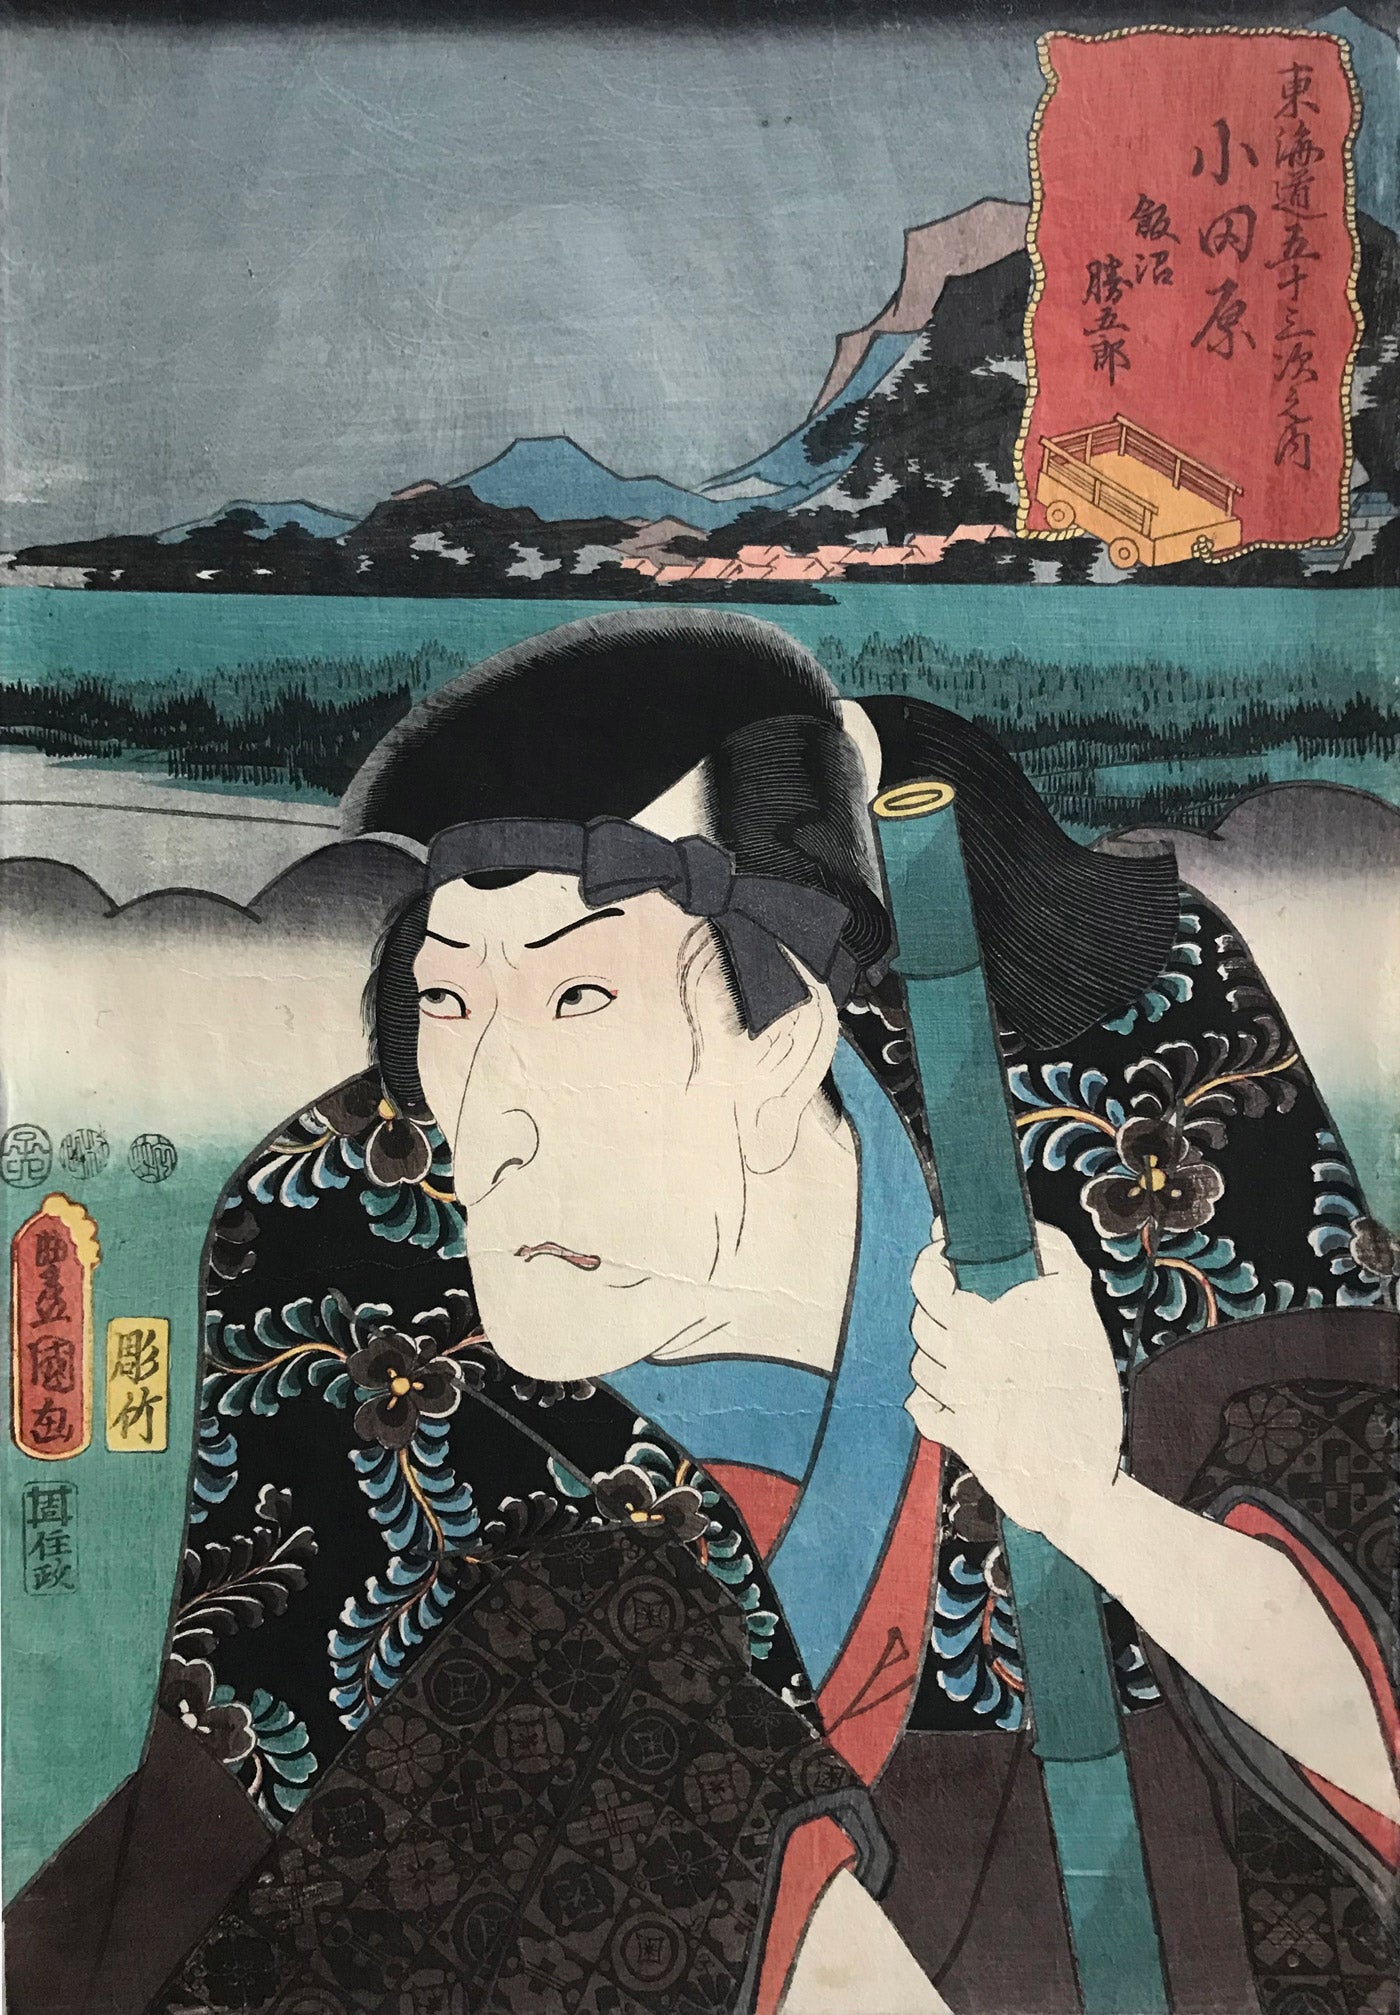 Morita Kanya XI as Iinuma Katsugoro